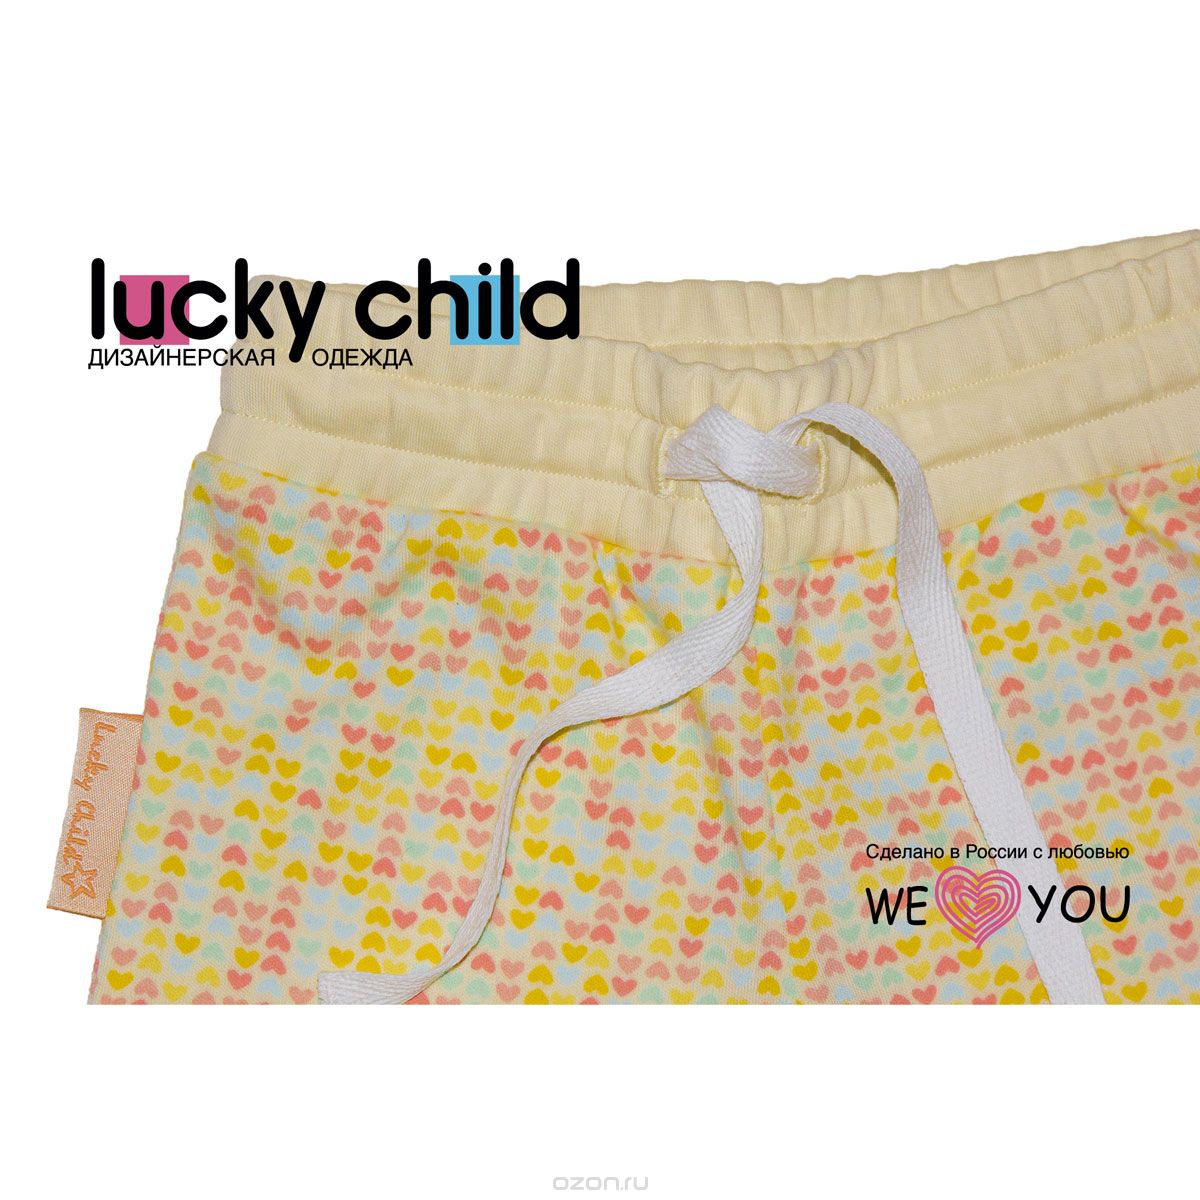    Lucky Child, : , , . 12-402.  104/110